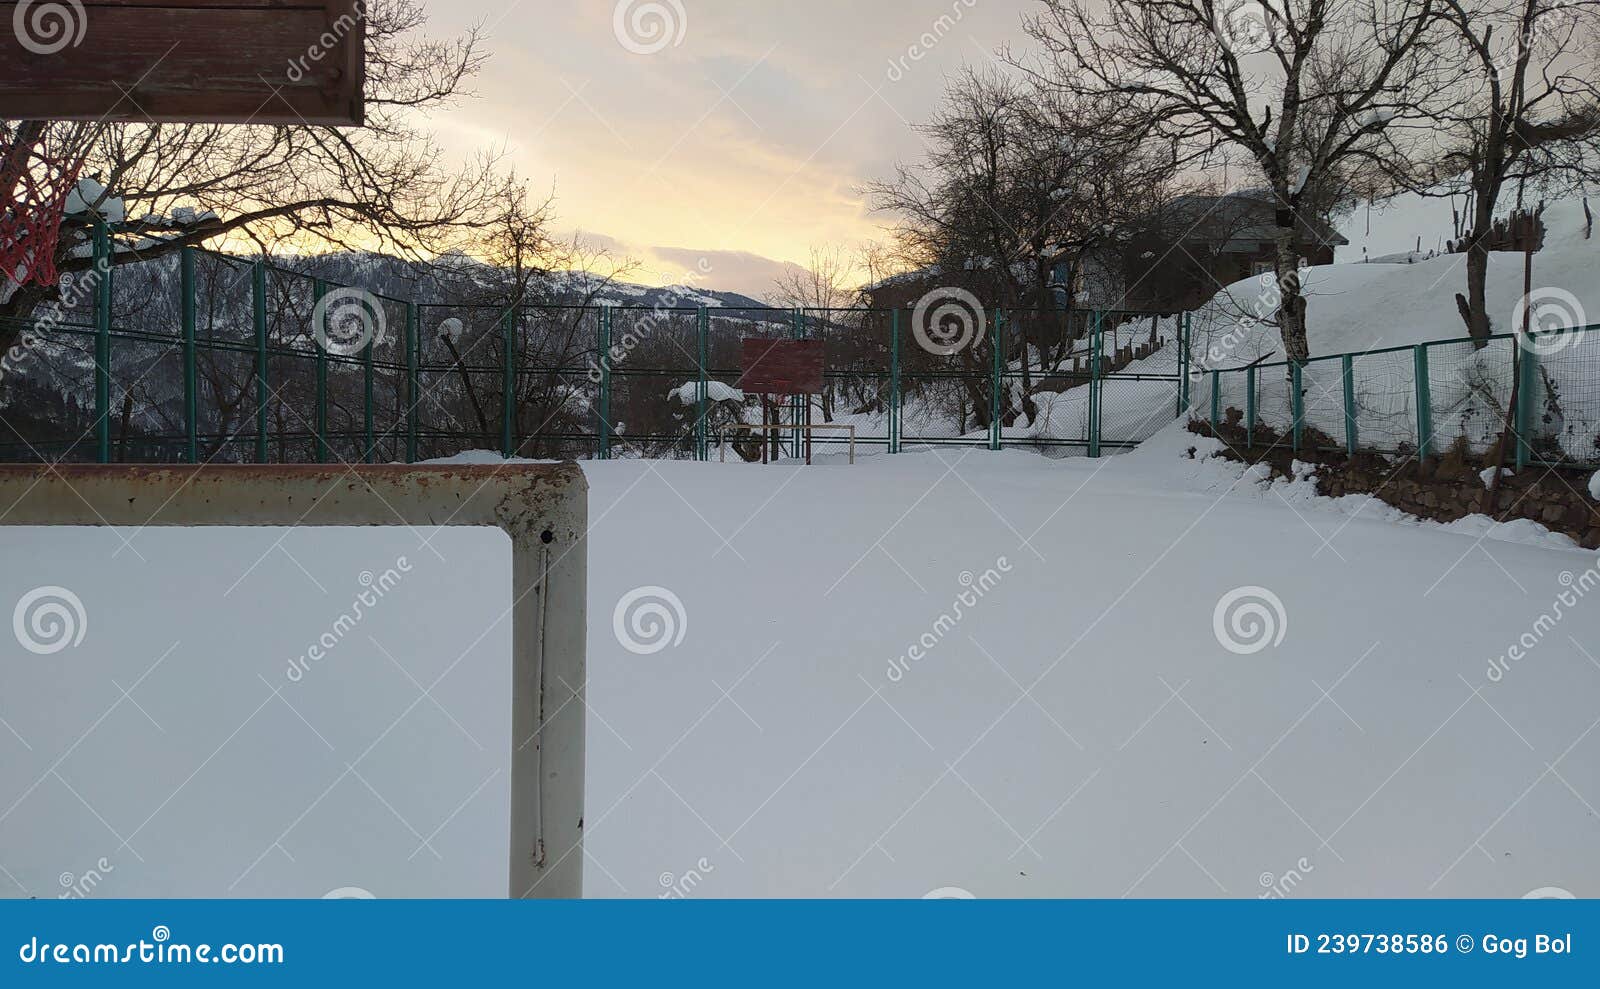 Snow and futboll stadium stock photo